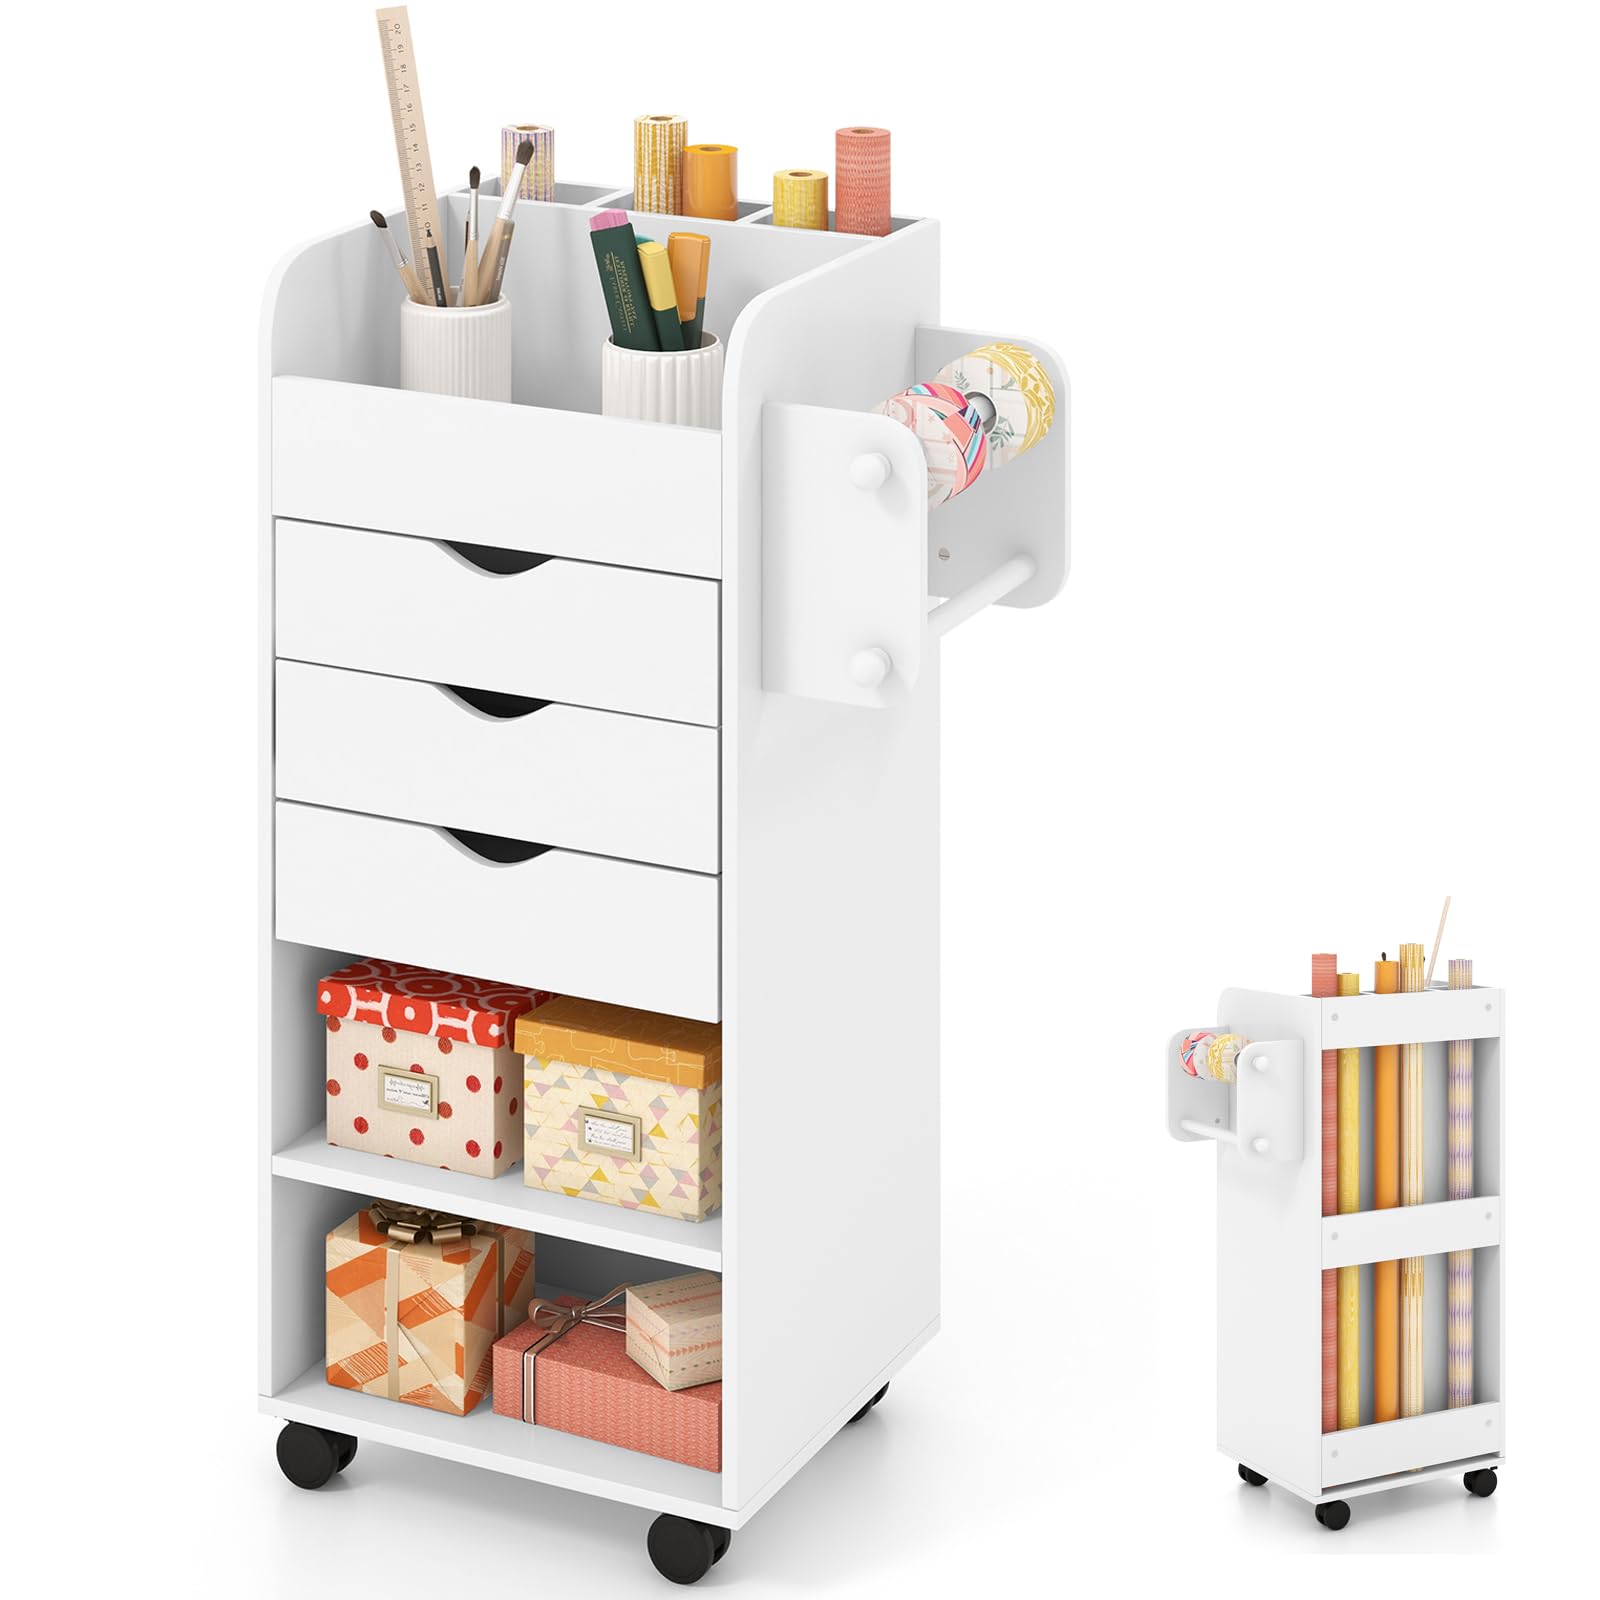 Giantex Craft Storage Cart - Utility Organizer Cart with 3 Drawers, 3 Shelves (White)